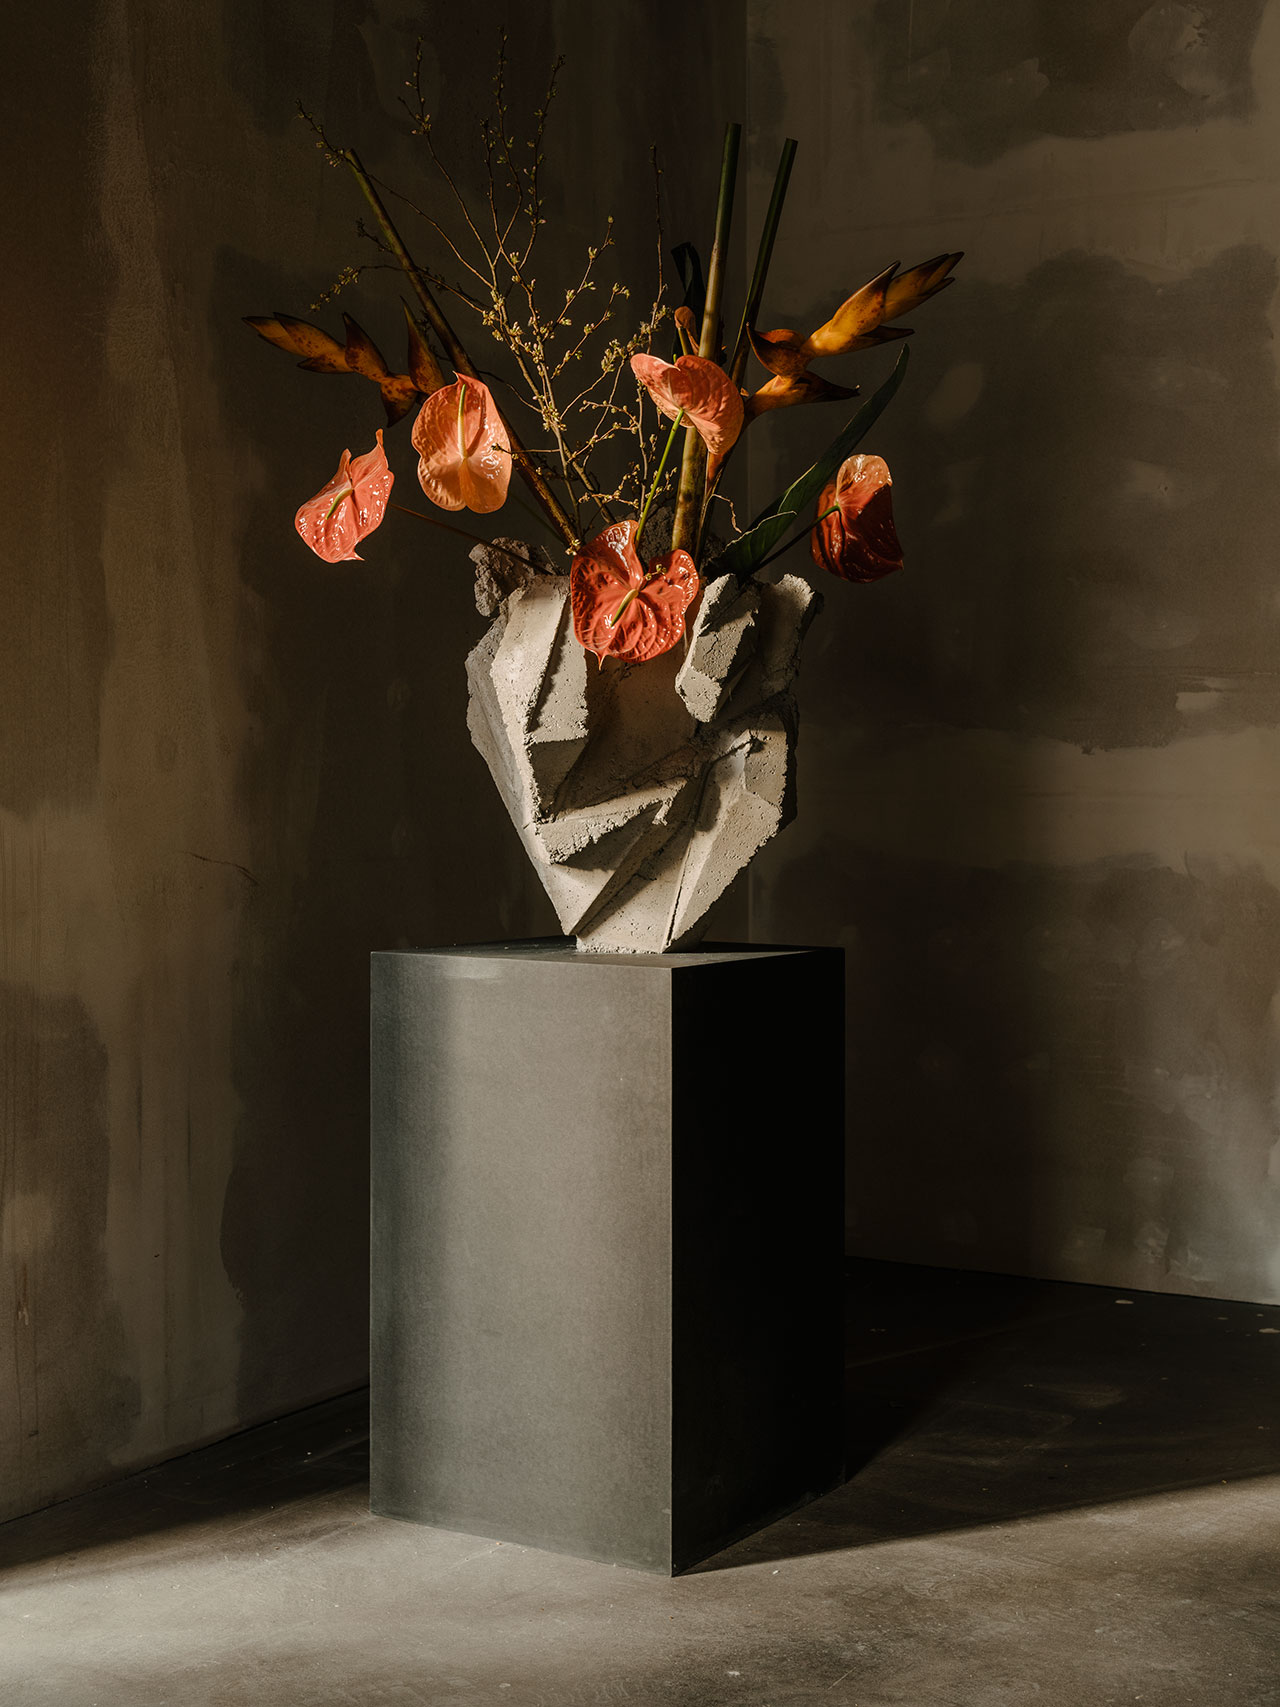 KINK Bar &amp; Restaurant.
Concrete vase by Phillip Emanuel Eyrich.
Photography by Robert Rieger. Courtesy of Kerim Seiler.